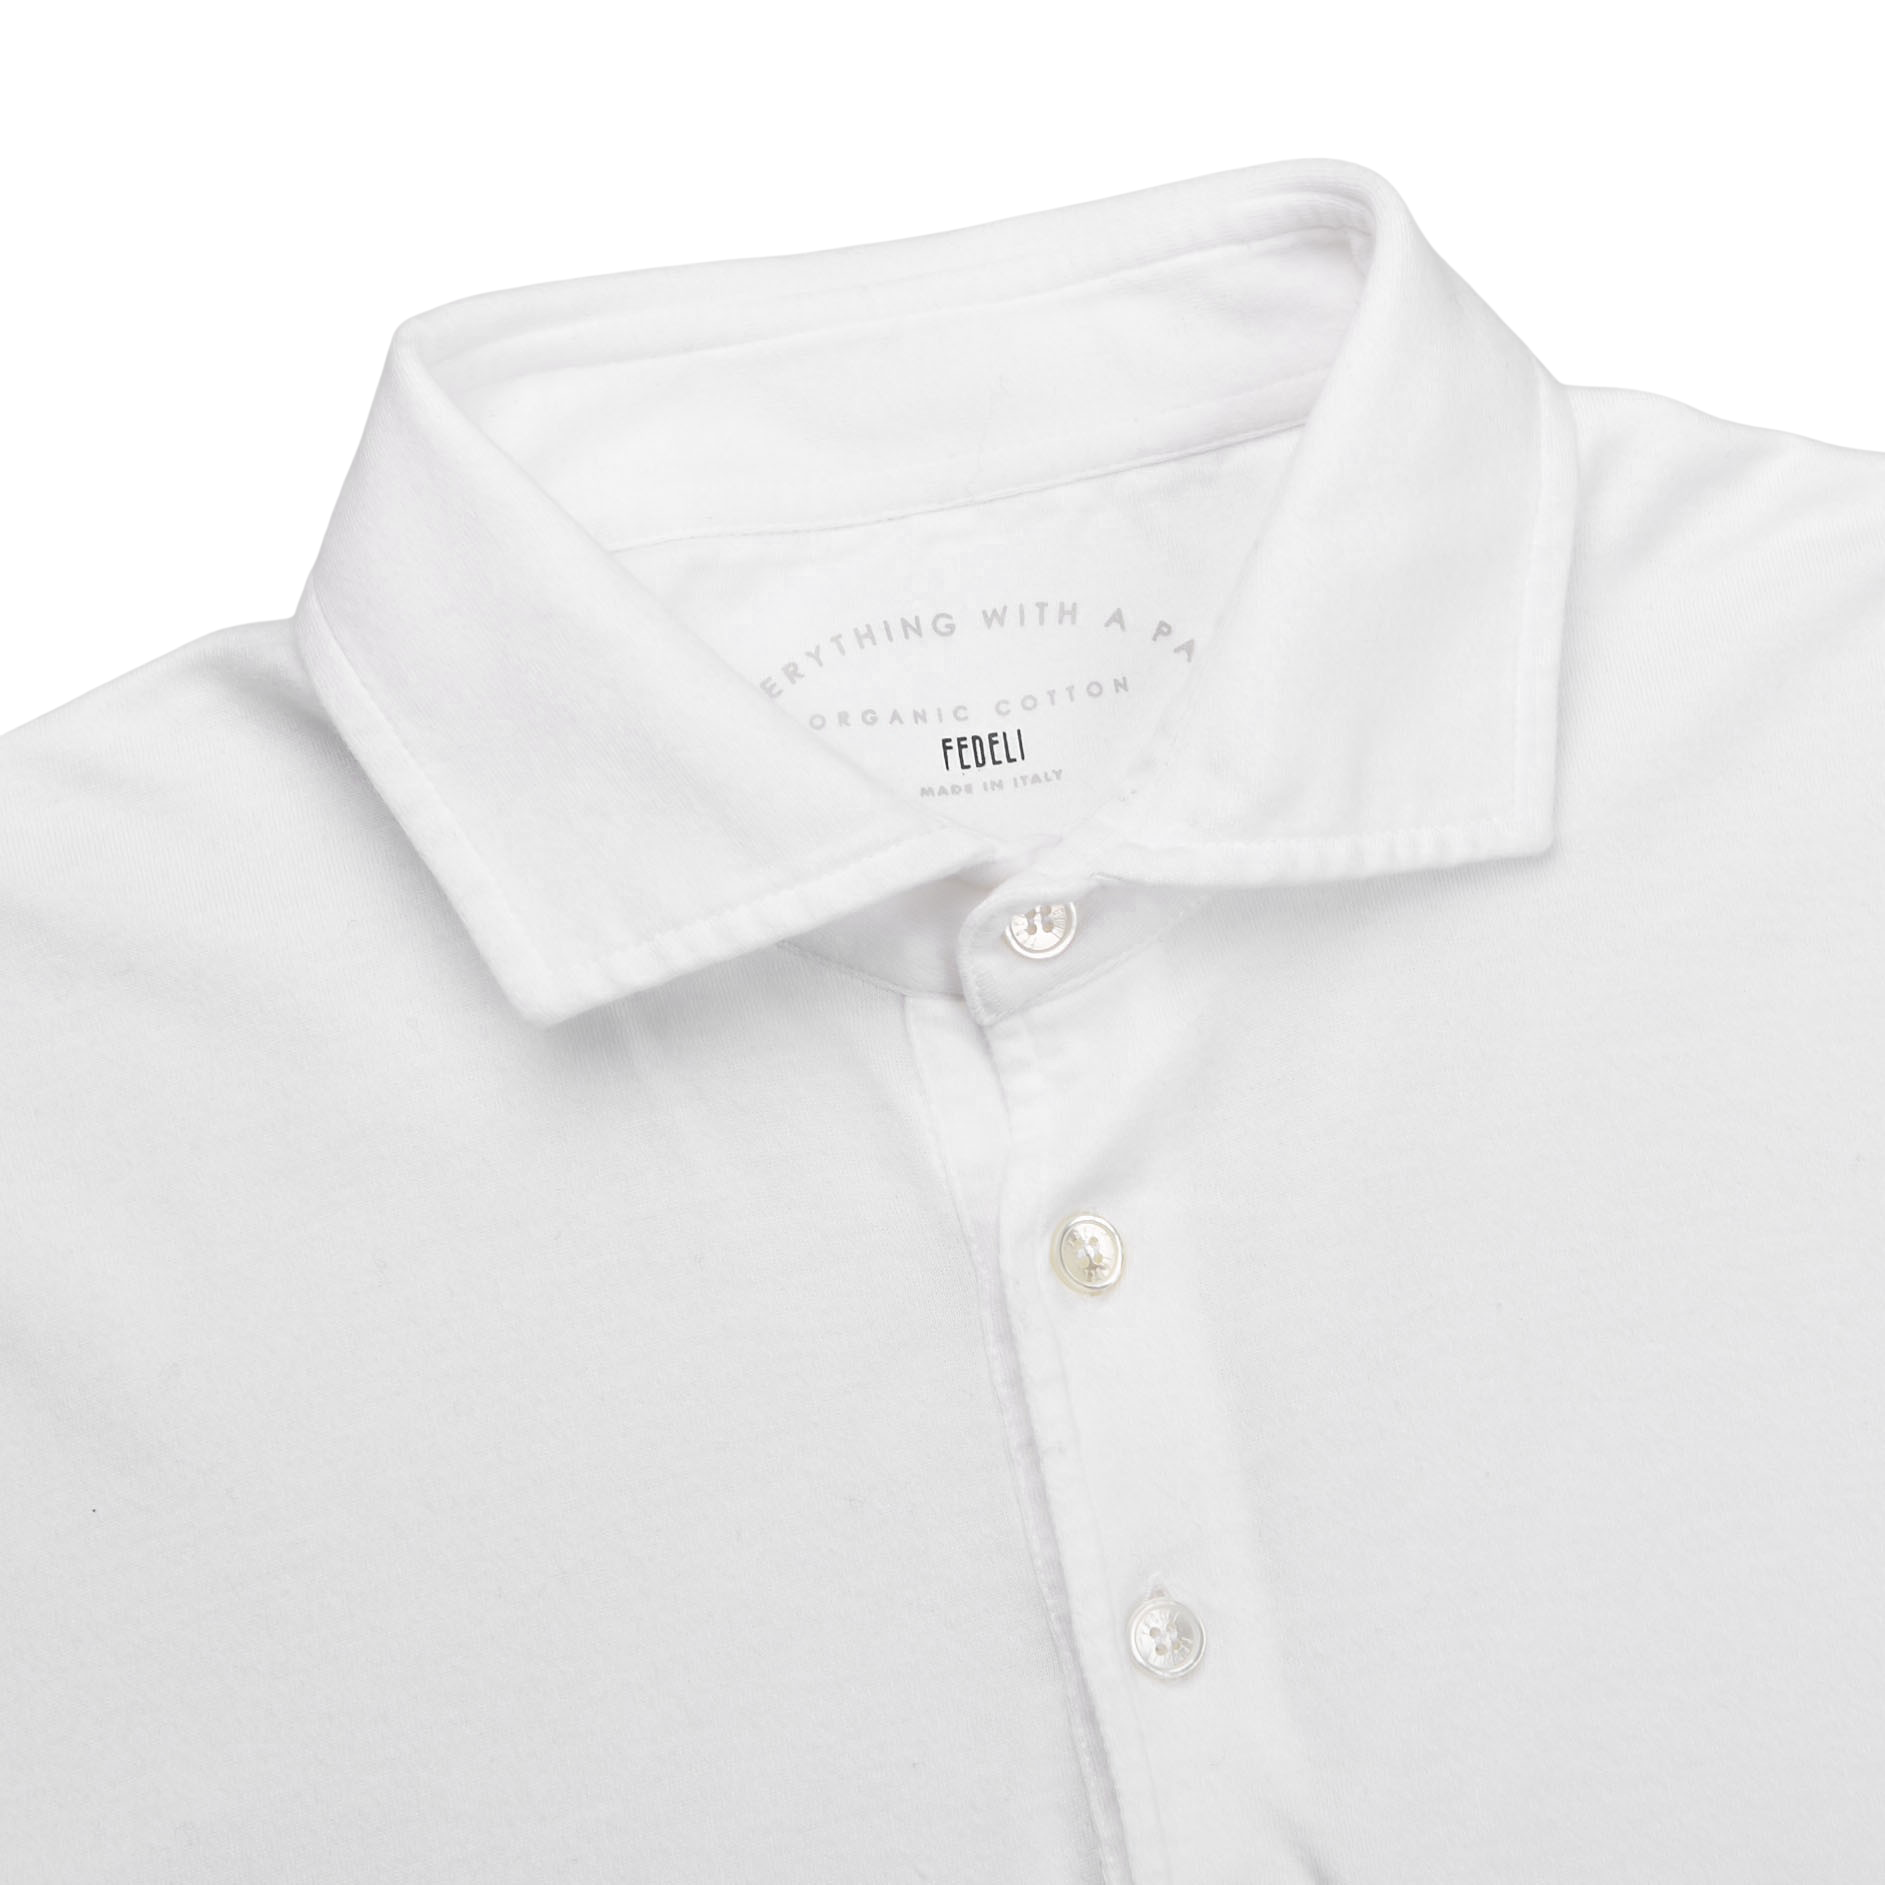 Fedeli White Organic Cotton Polo Shirt Collar